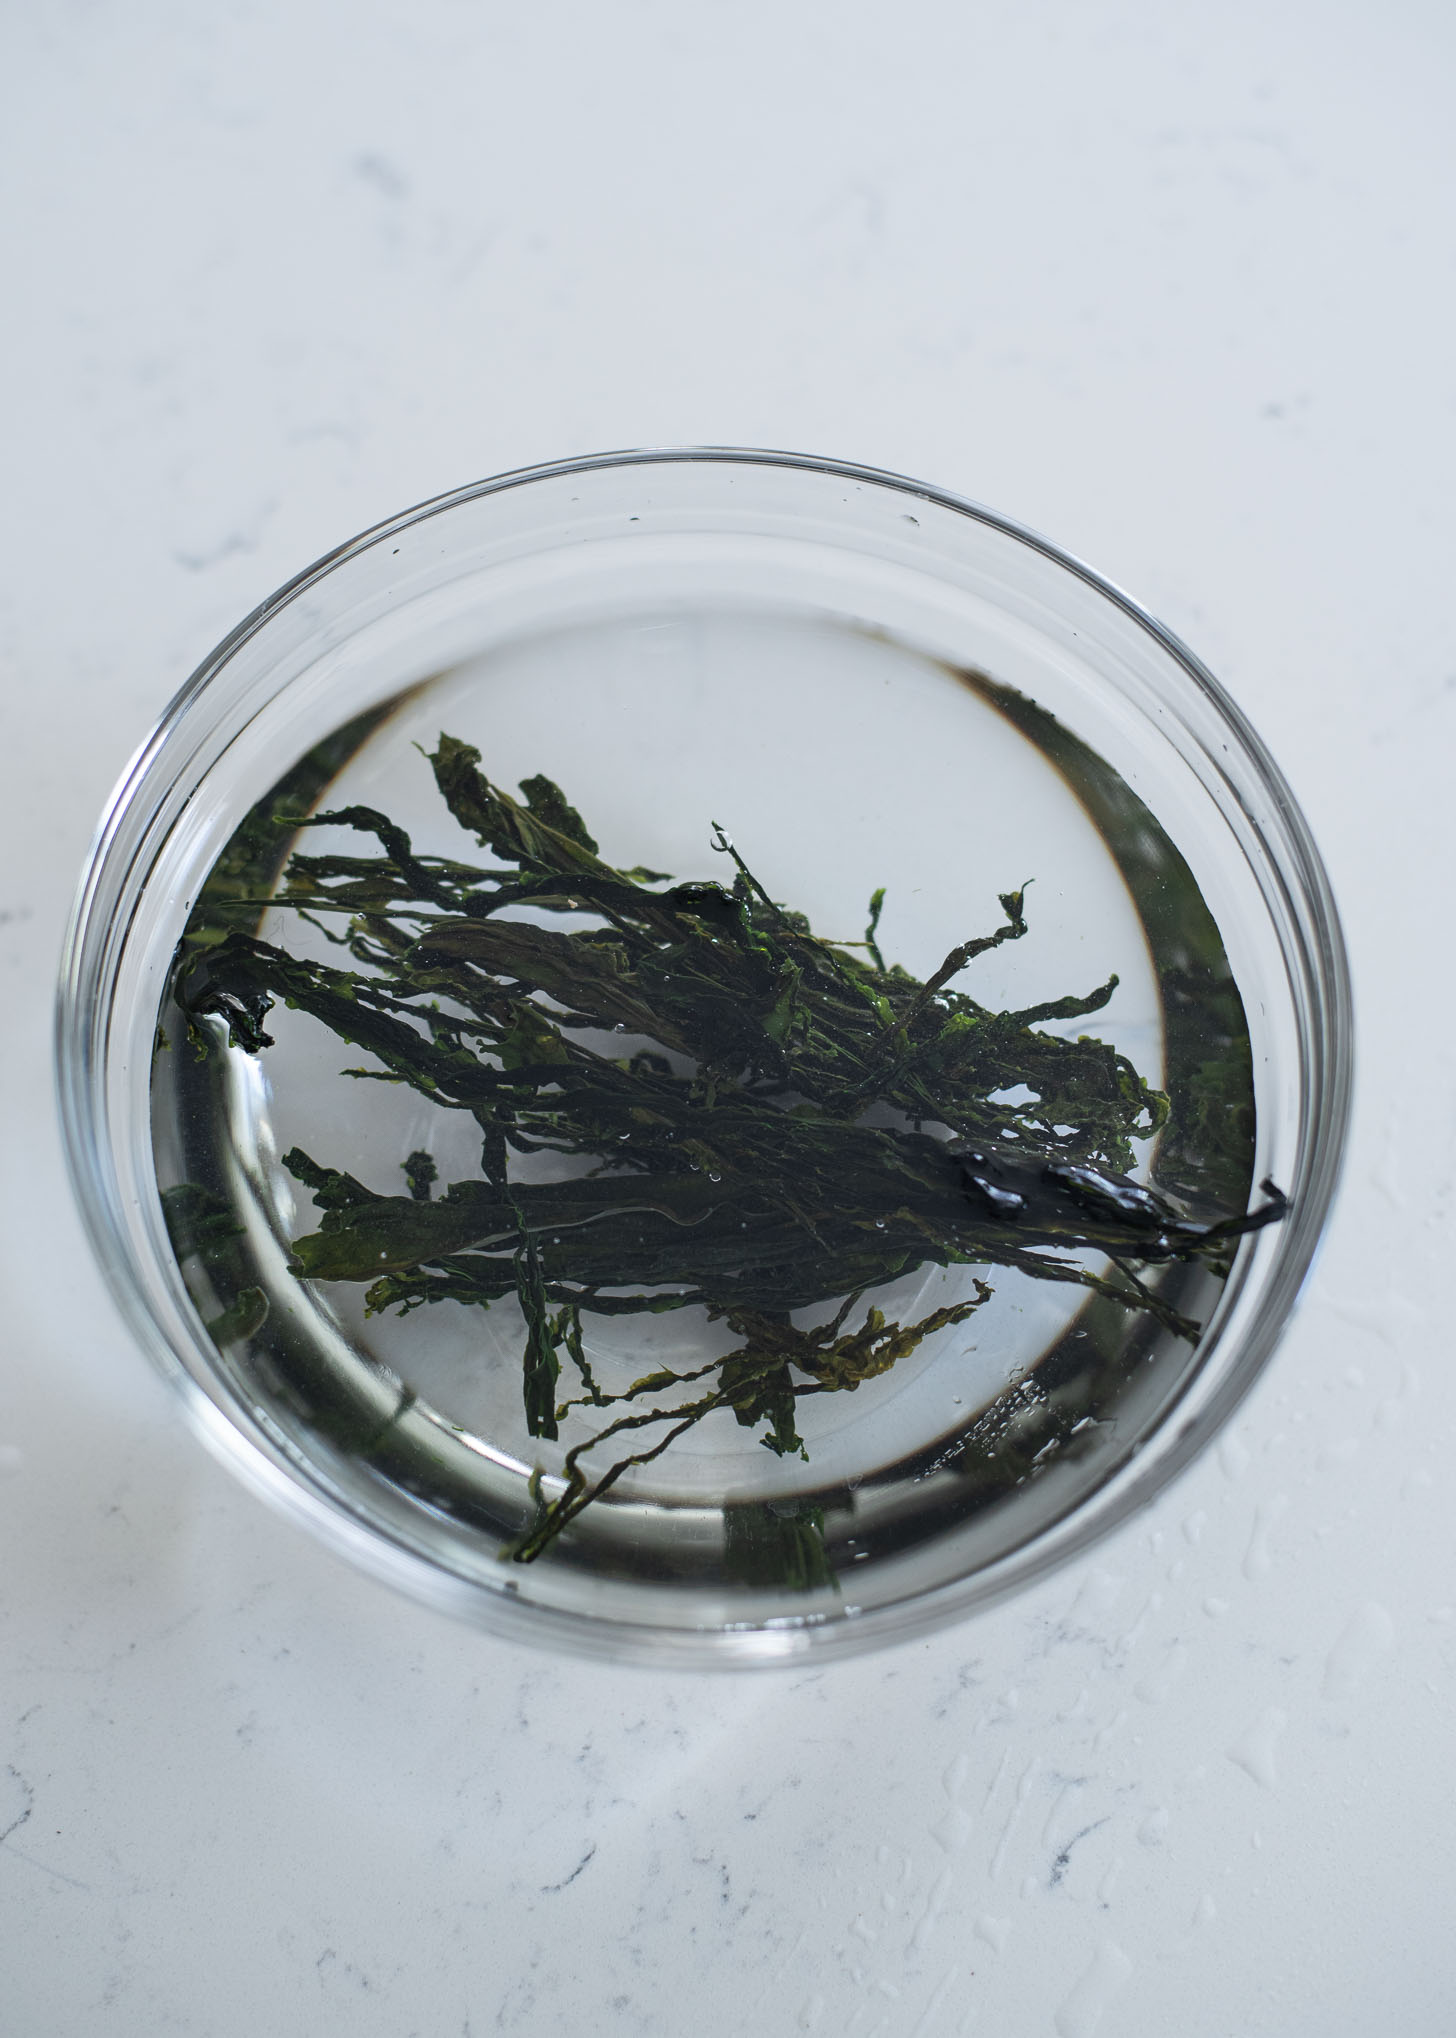 Dried seaweed is soaking in the water